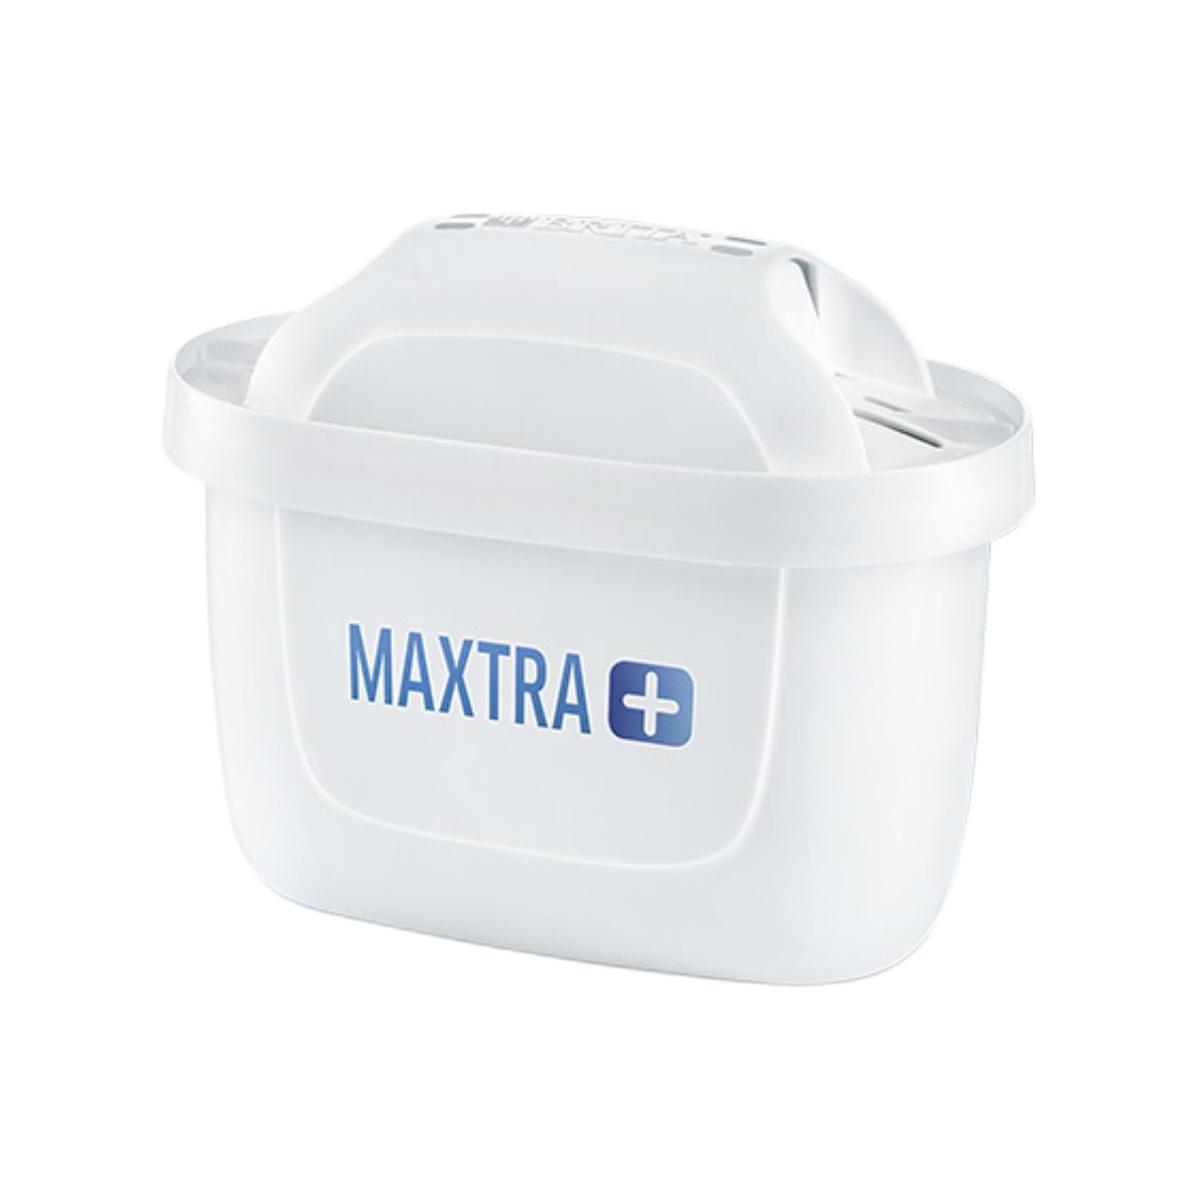 BRITA 碧然德 Maxtra+ 滤水壶滤芯 12枚装 标准款 298元